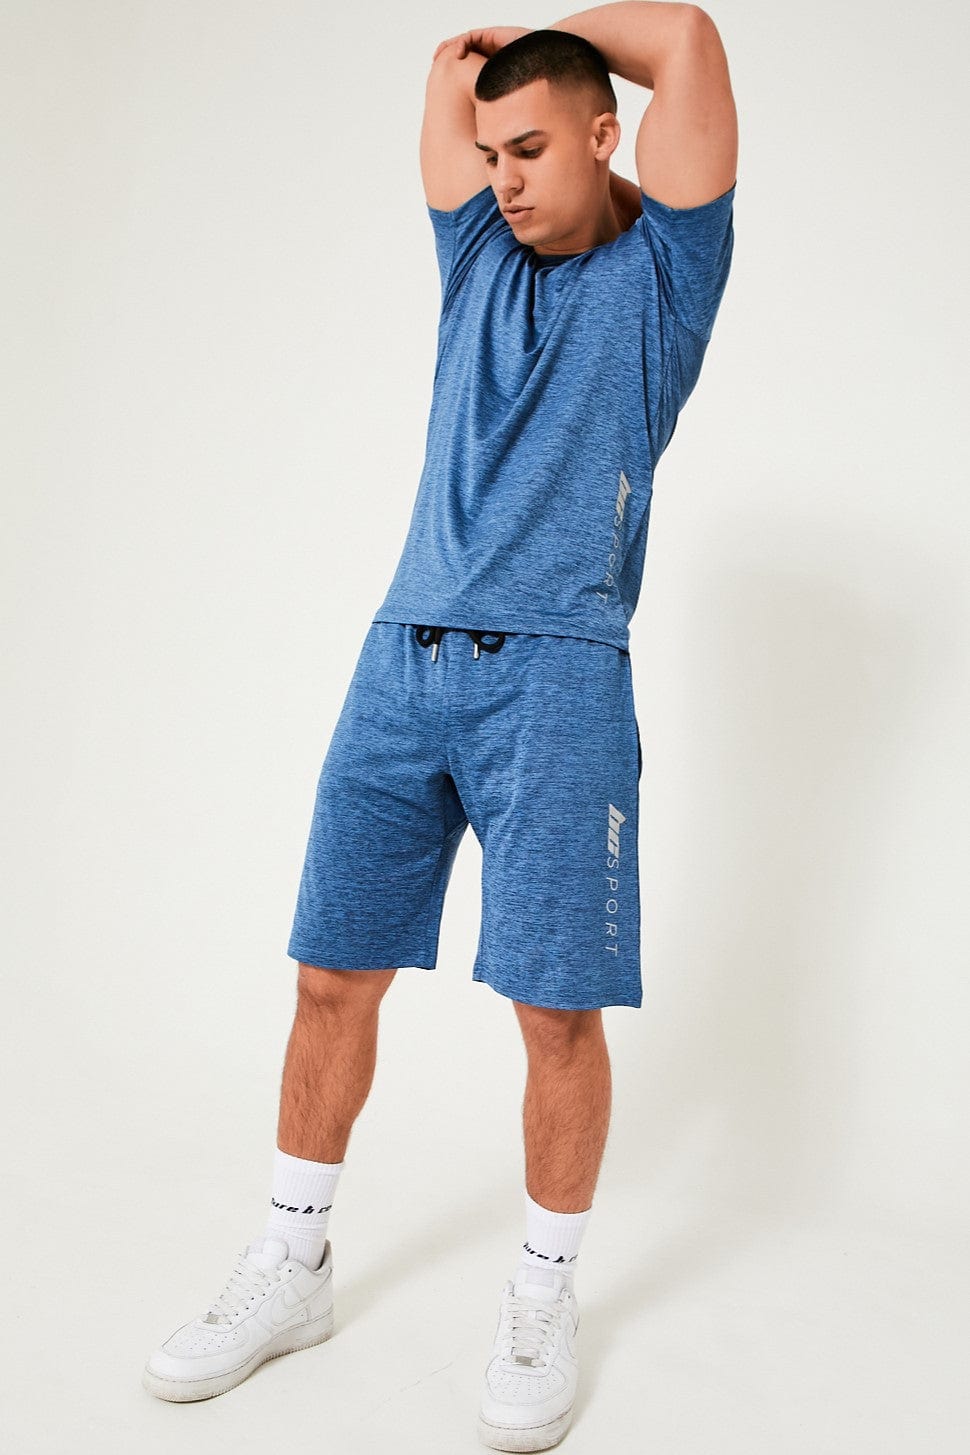 Hopton Men's Activewear Set - Blue